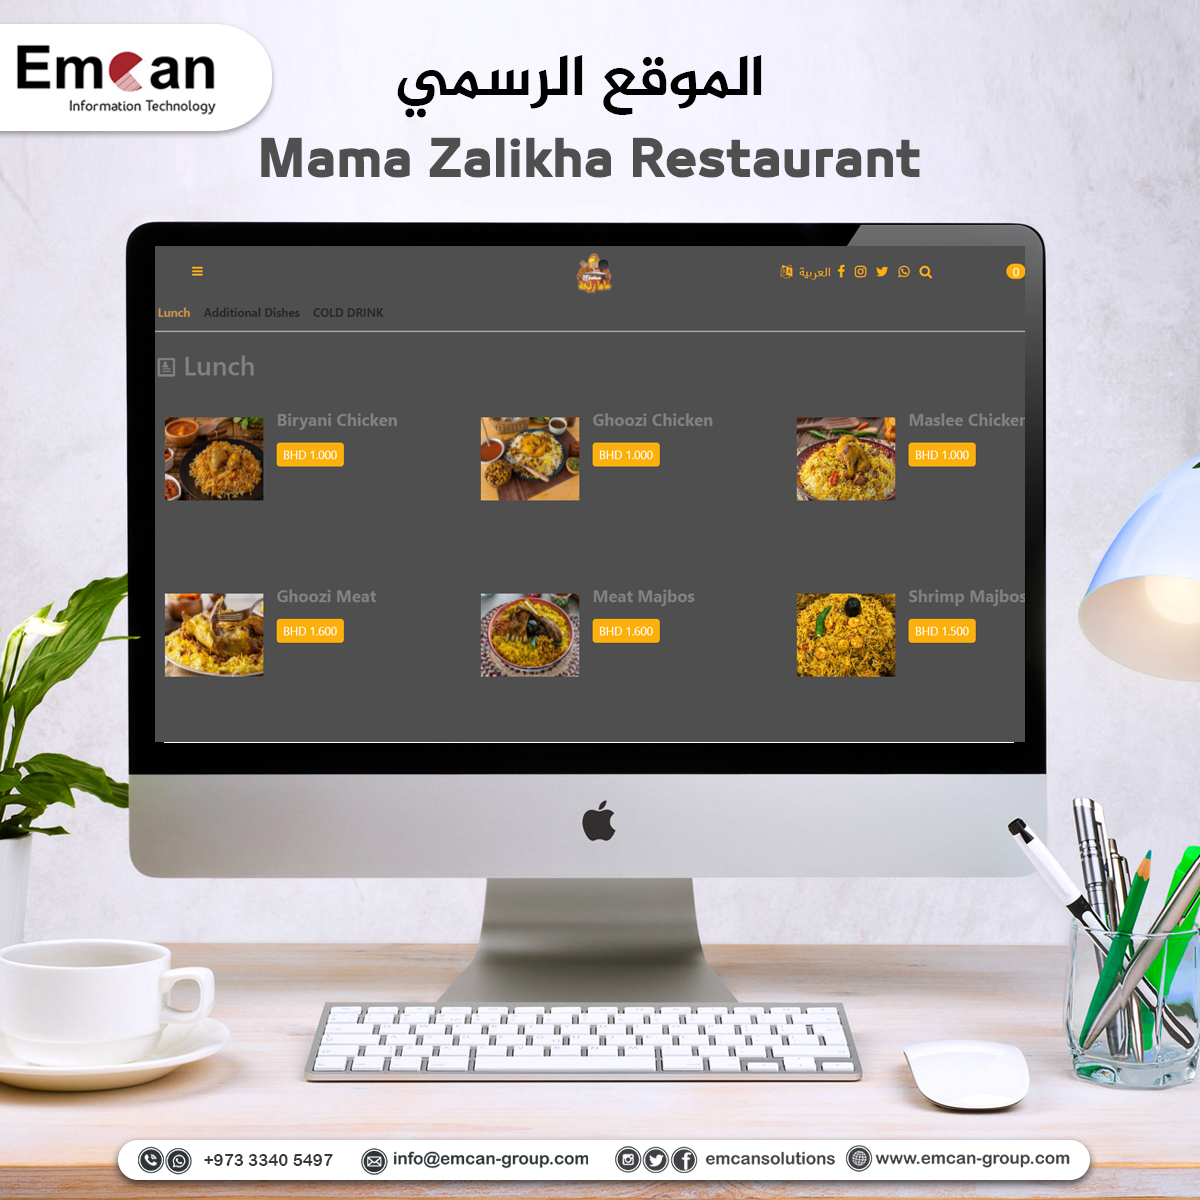 Mama Zalikha Restaurant website